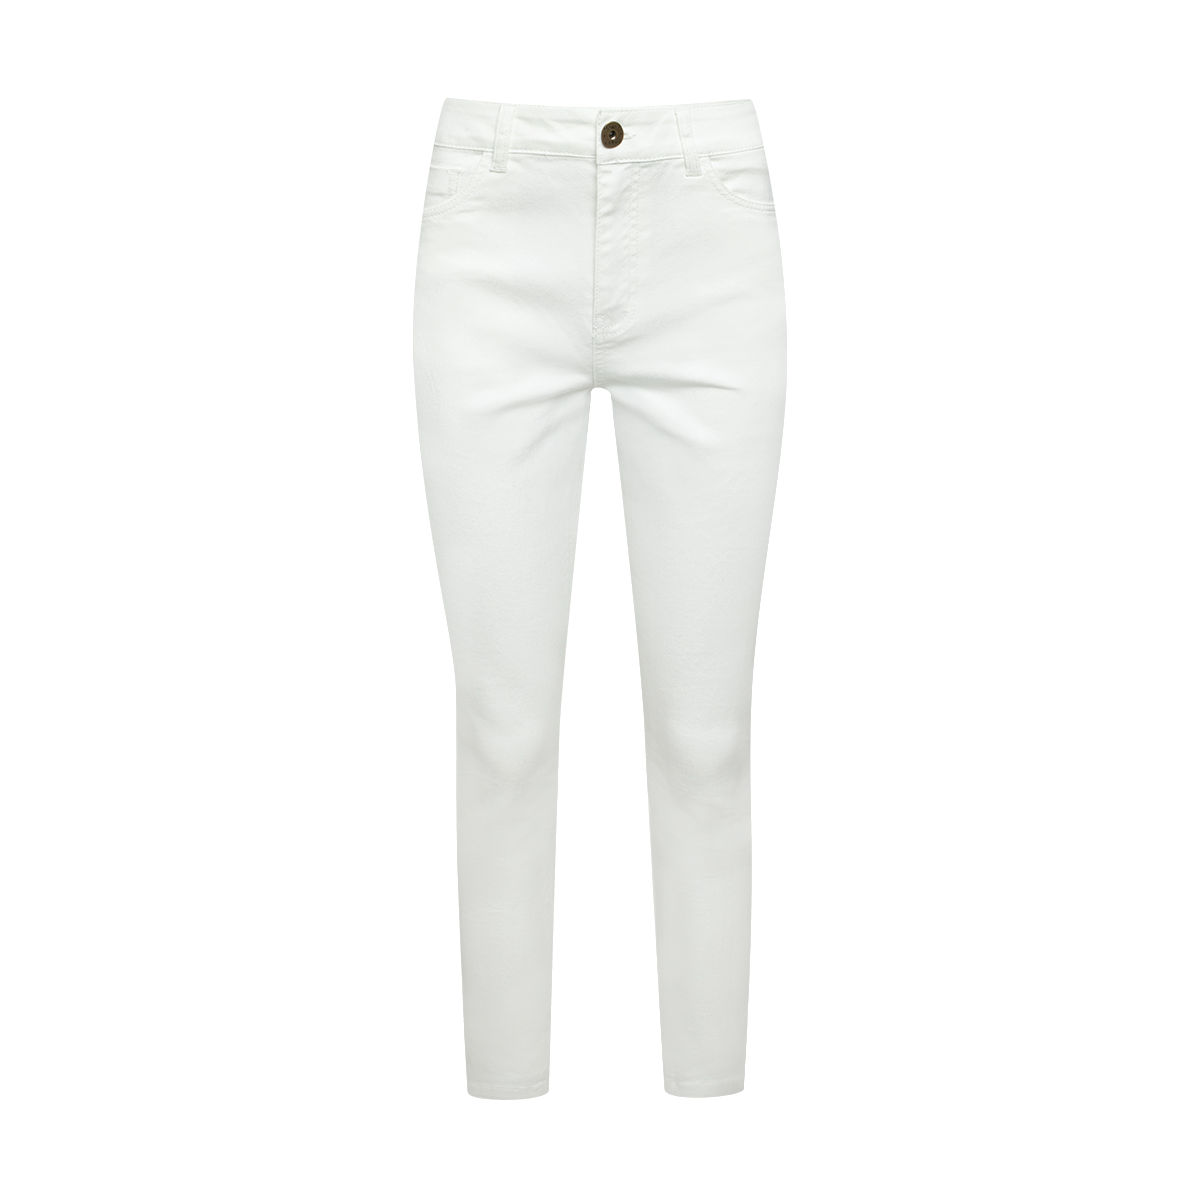 Women's White Jeans - Express